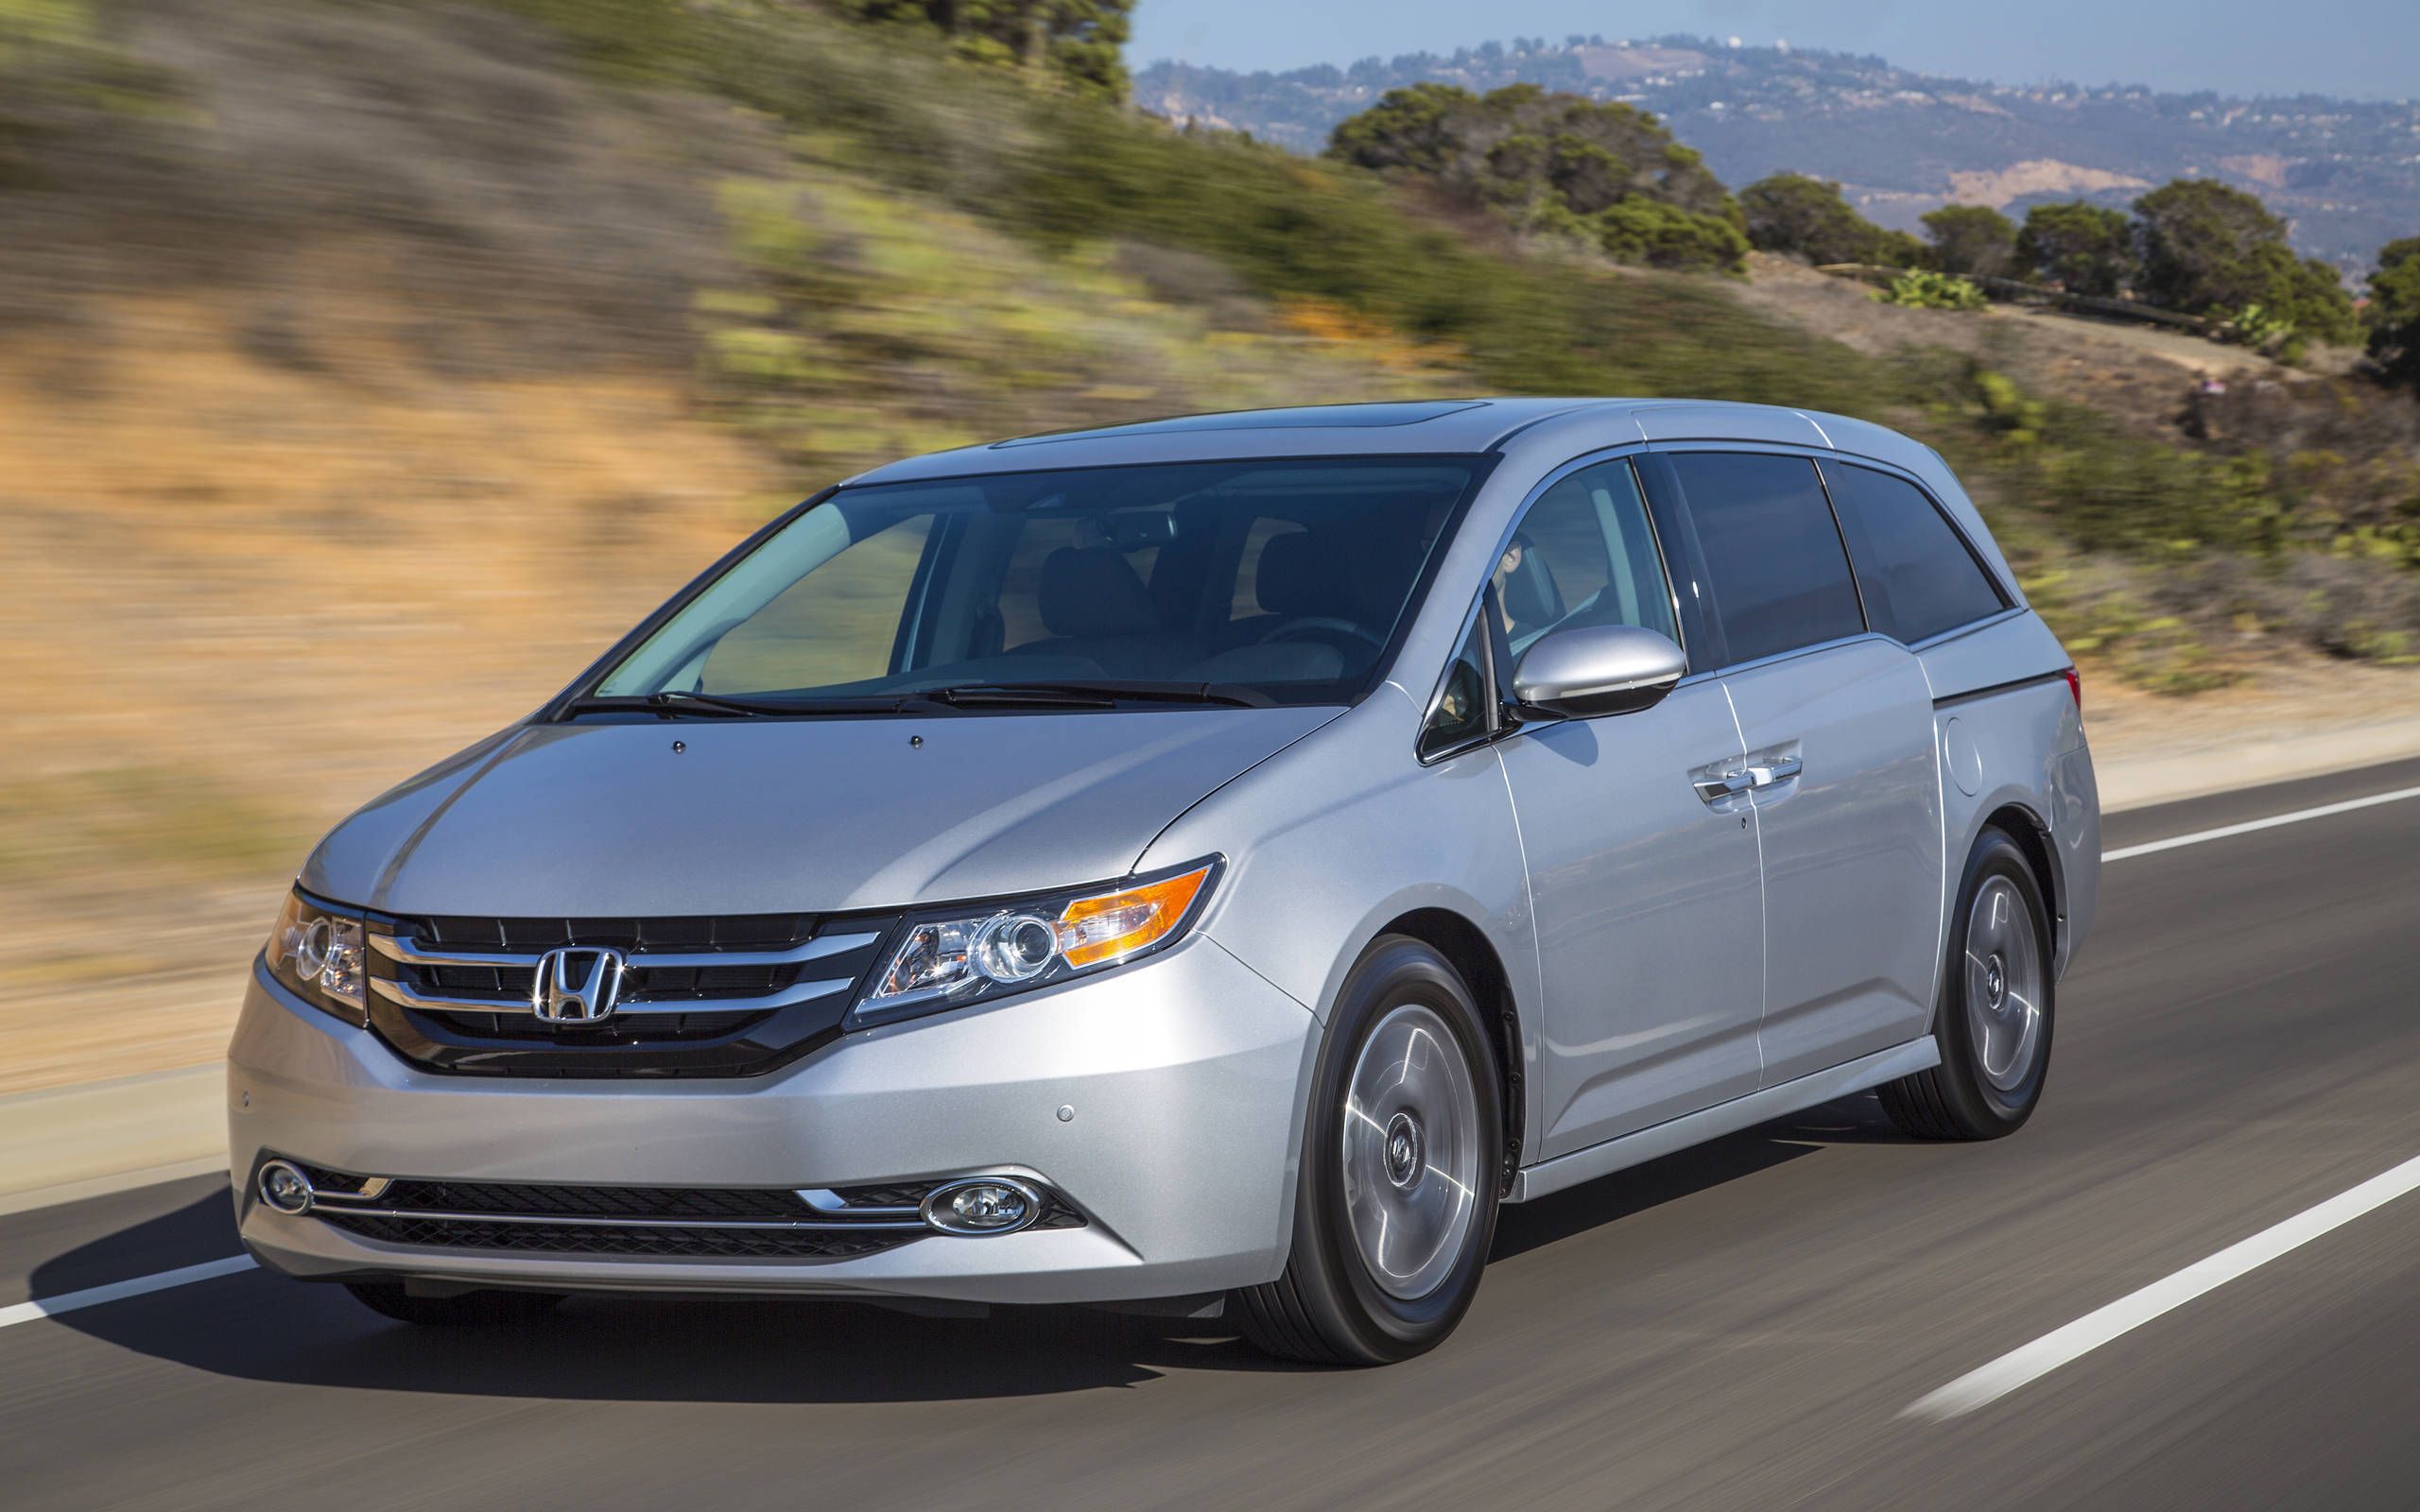 2015 Honda Odyssey Touring Elite review notes